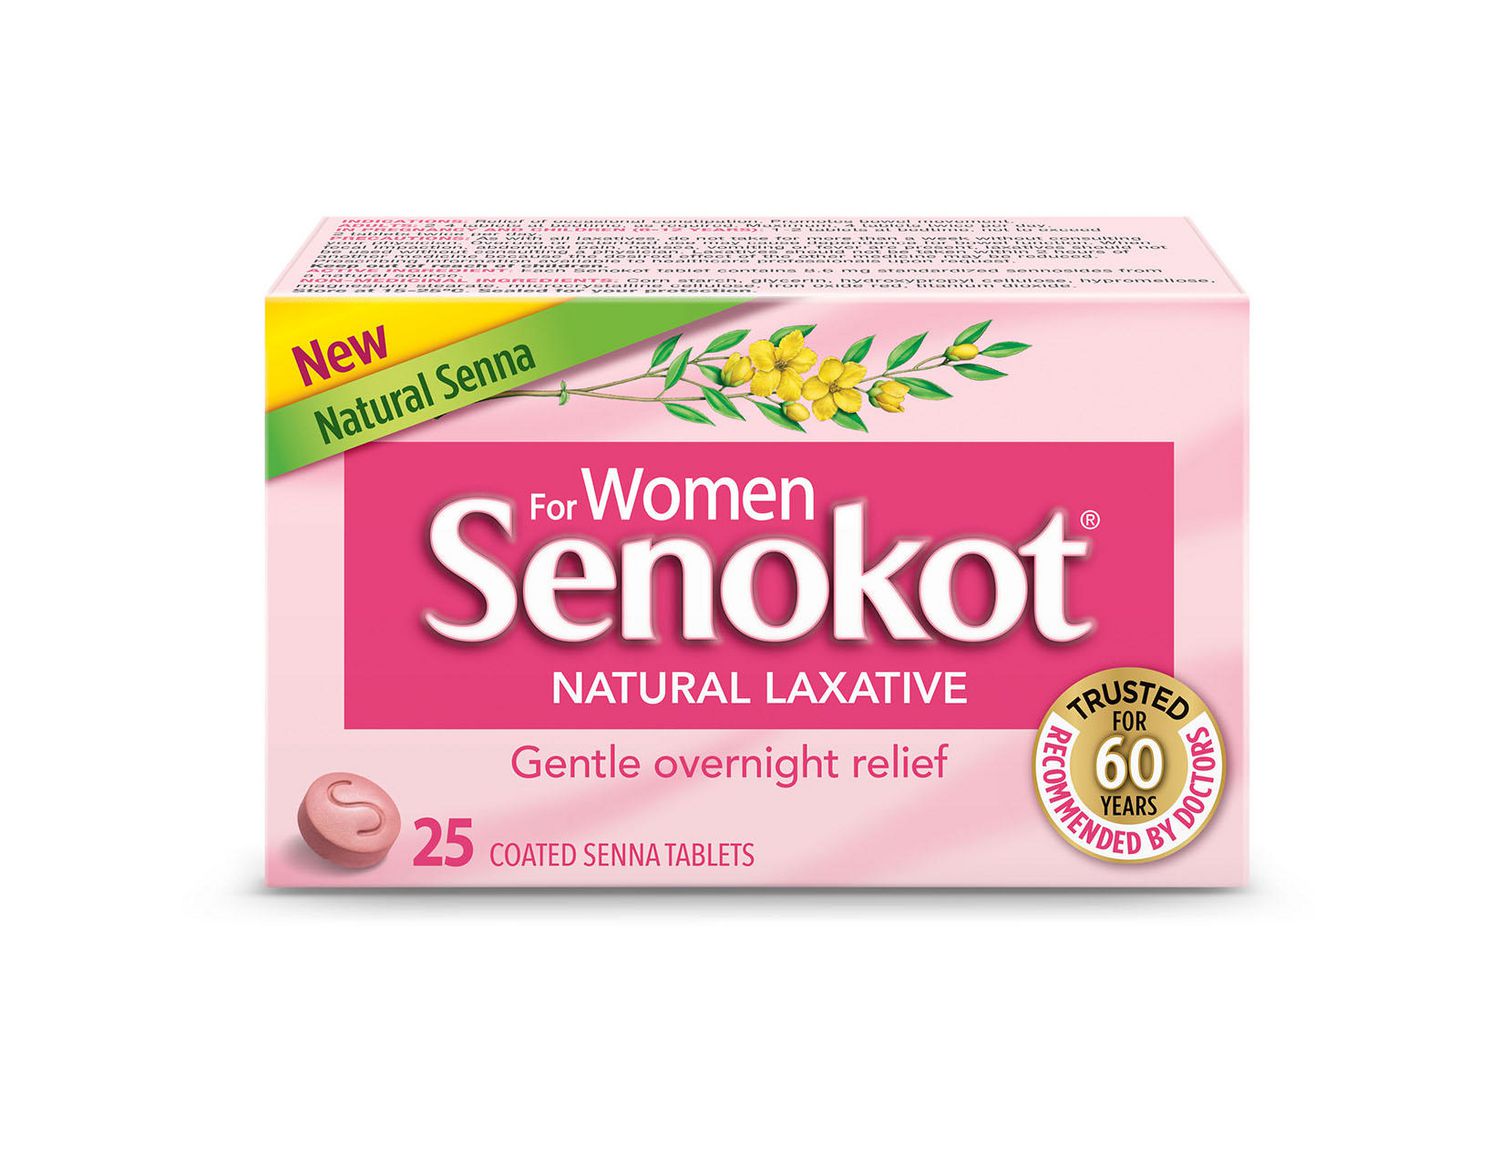 Senokot for Women Natural Laxative 25 Coated Senna Tablets